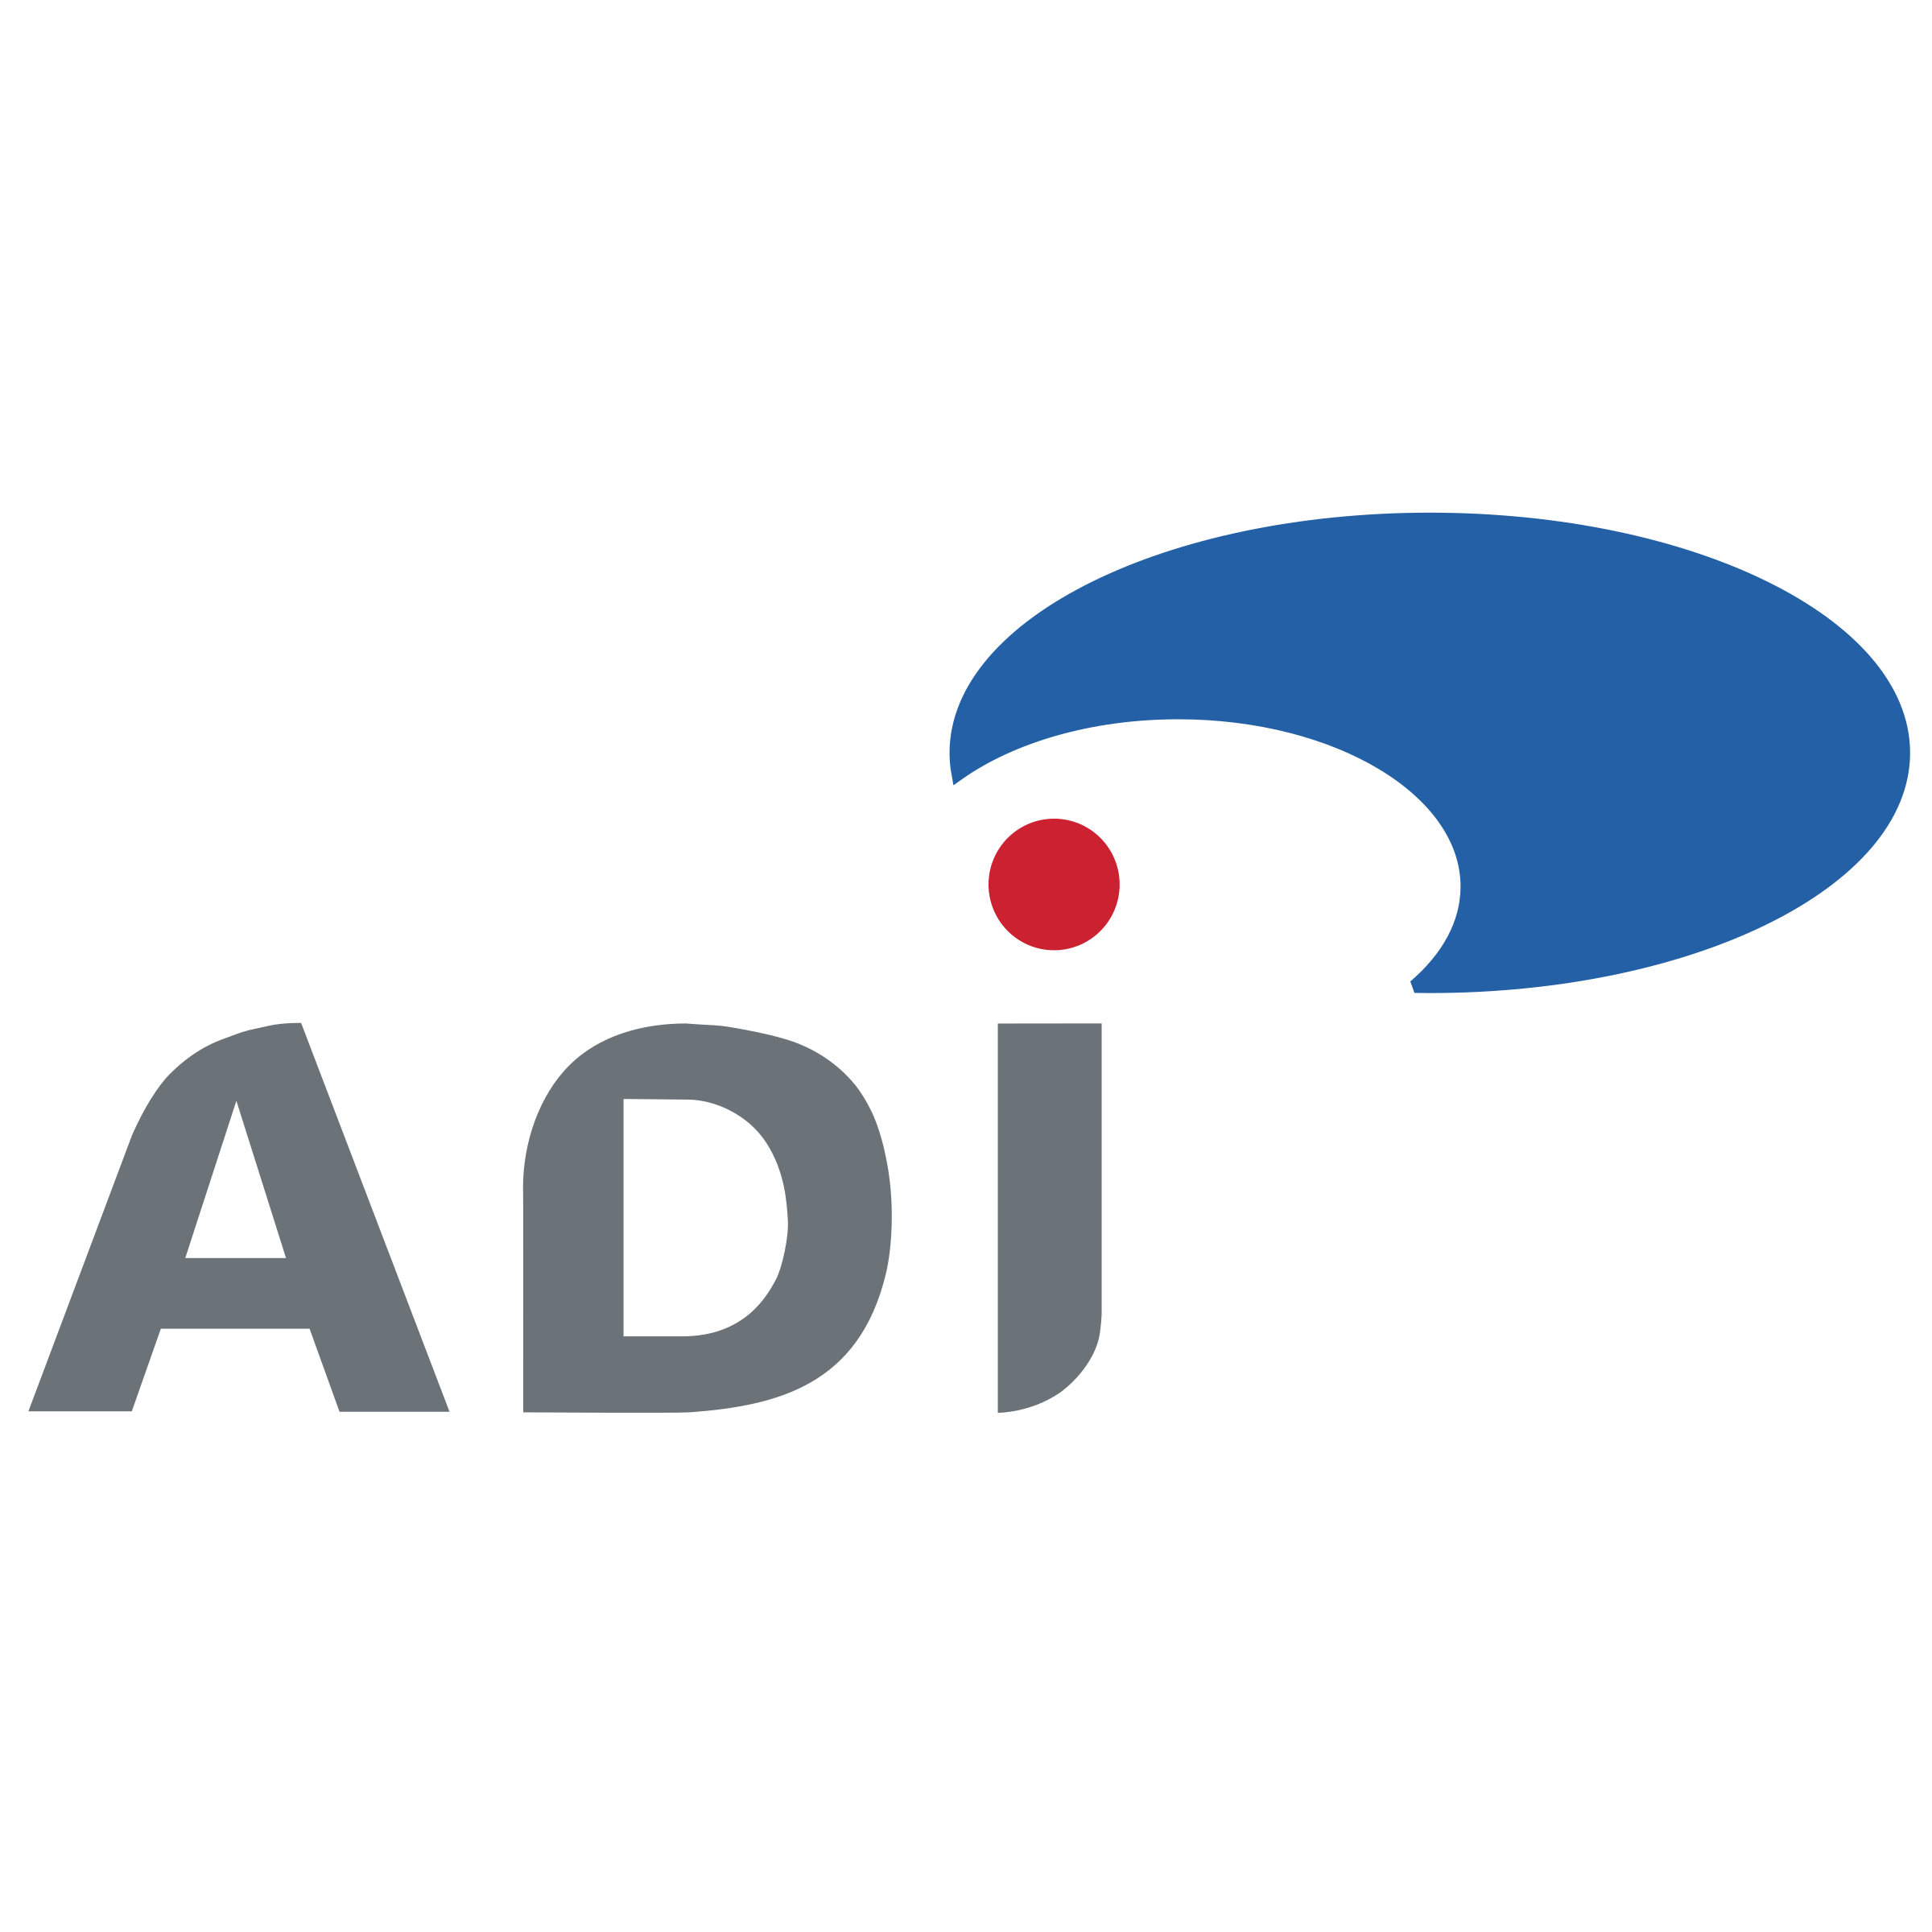 Adi Logo - ADI Logo PNG Transparent & SVG Vector